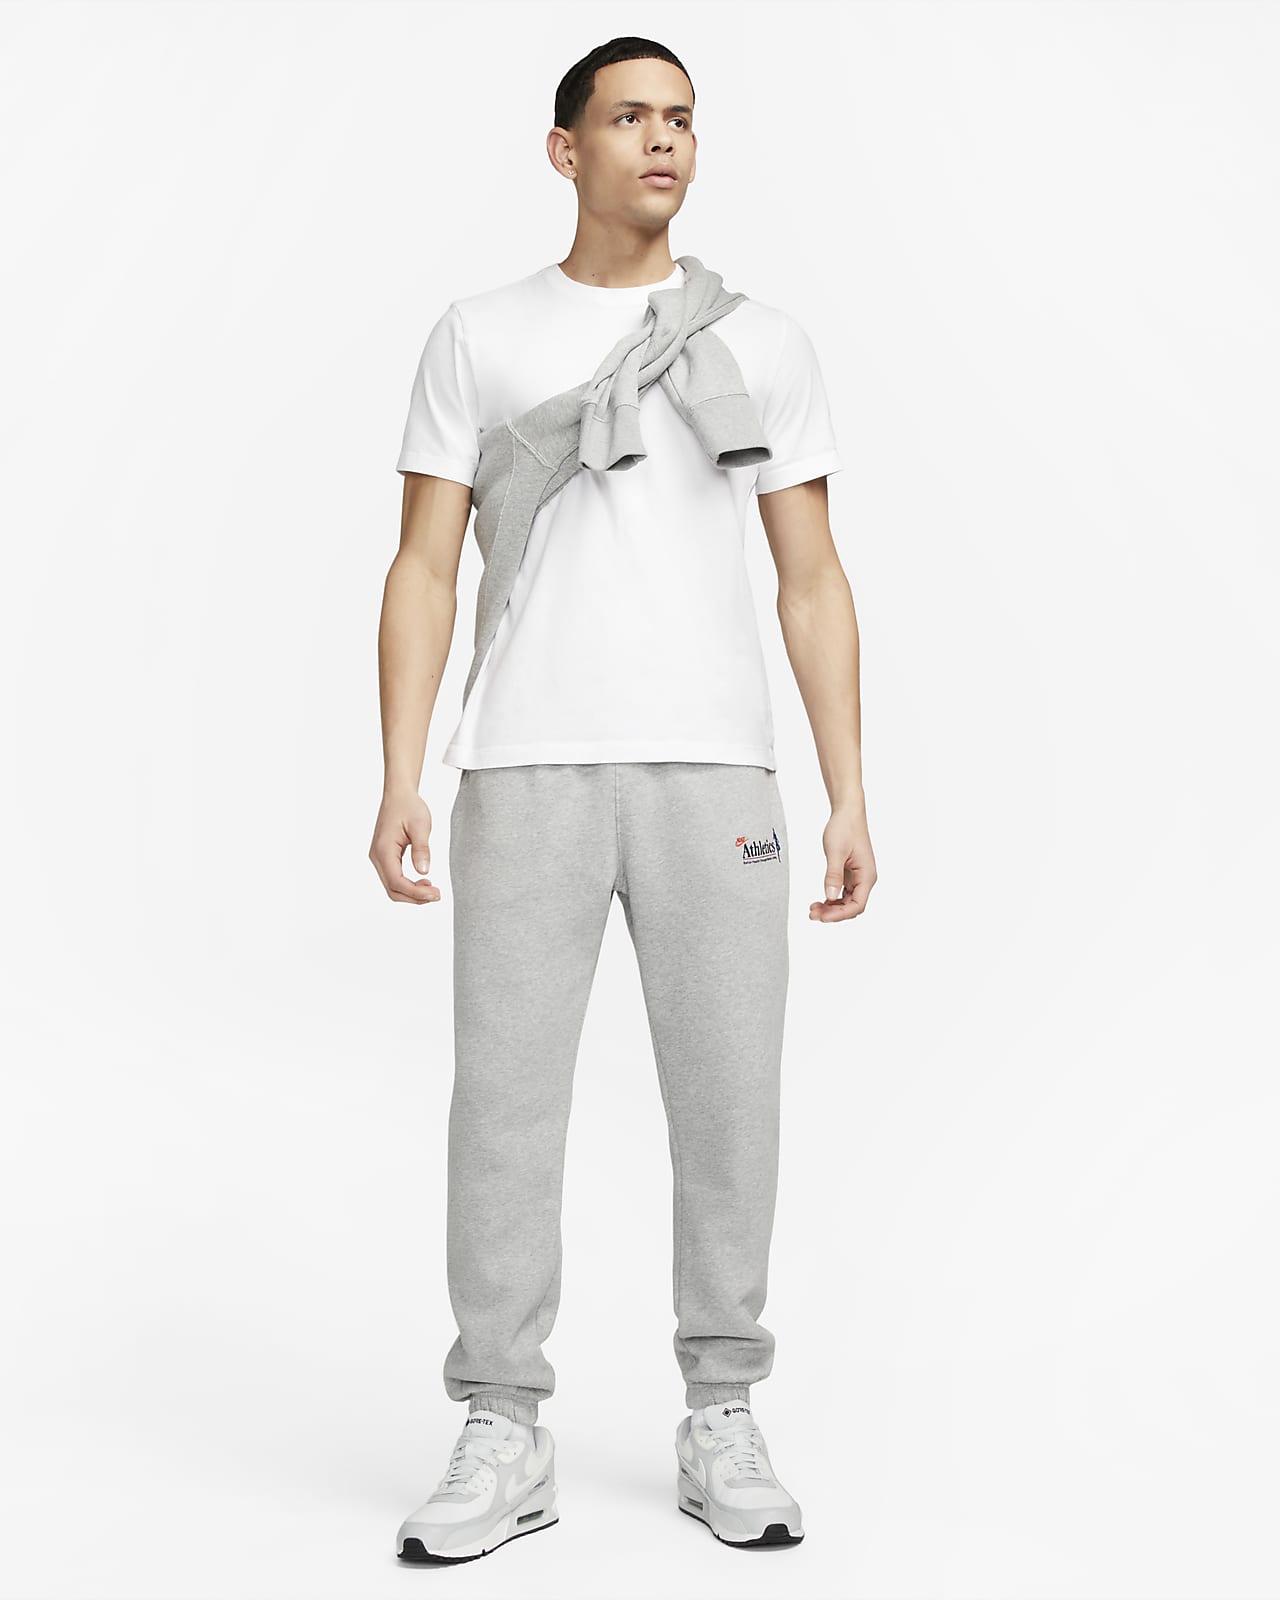 Nike Ticket Trousers Fleece - CZ9901-383 - Men's Collection